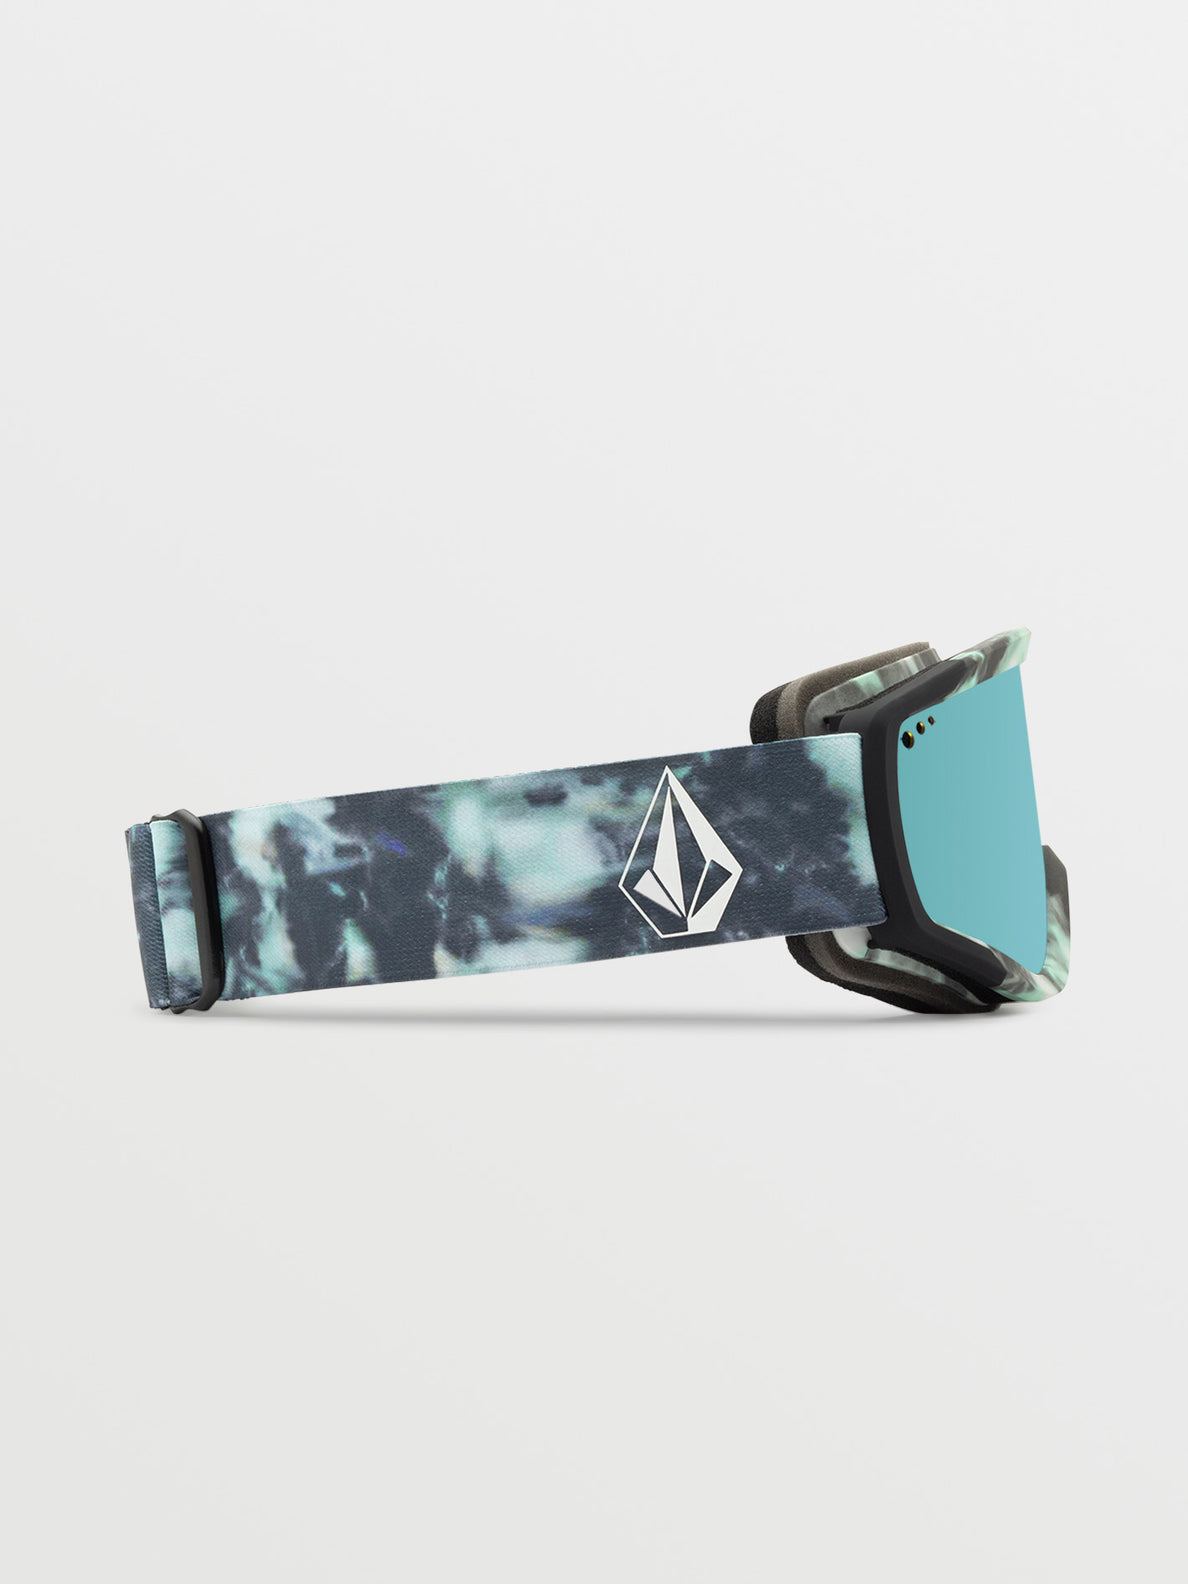 Volcom Attunga Youth Snowboard Goggles - Spritz Black/Ice Chrome + Bonus Dark Grey Lens